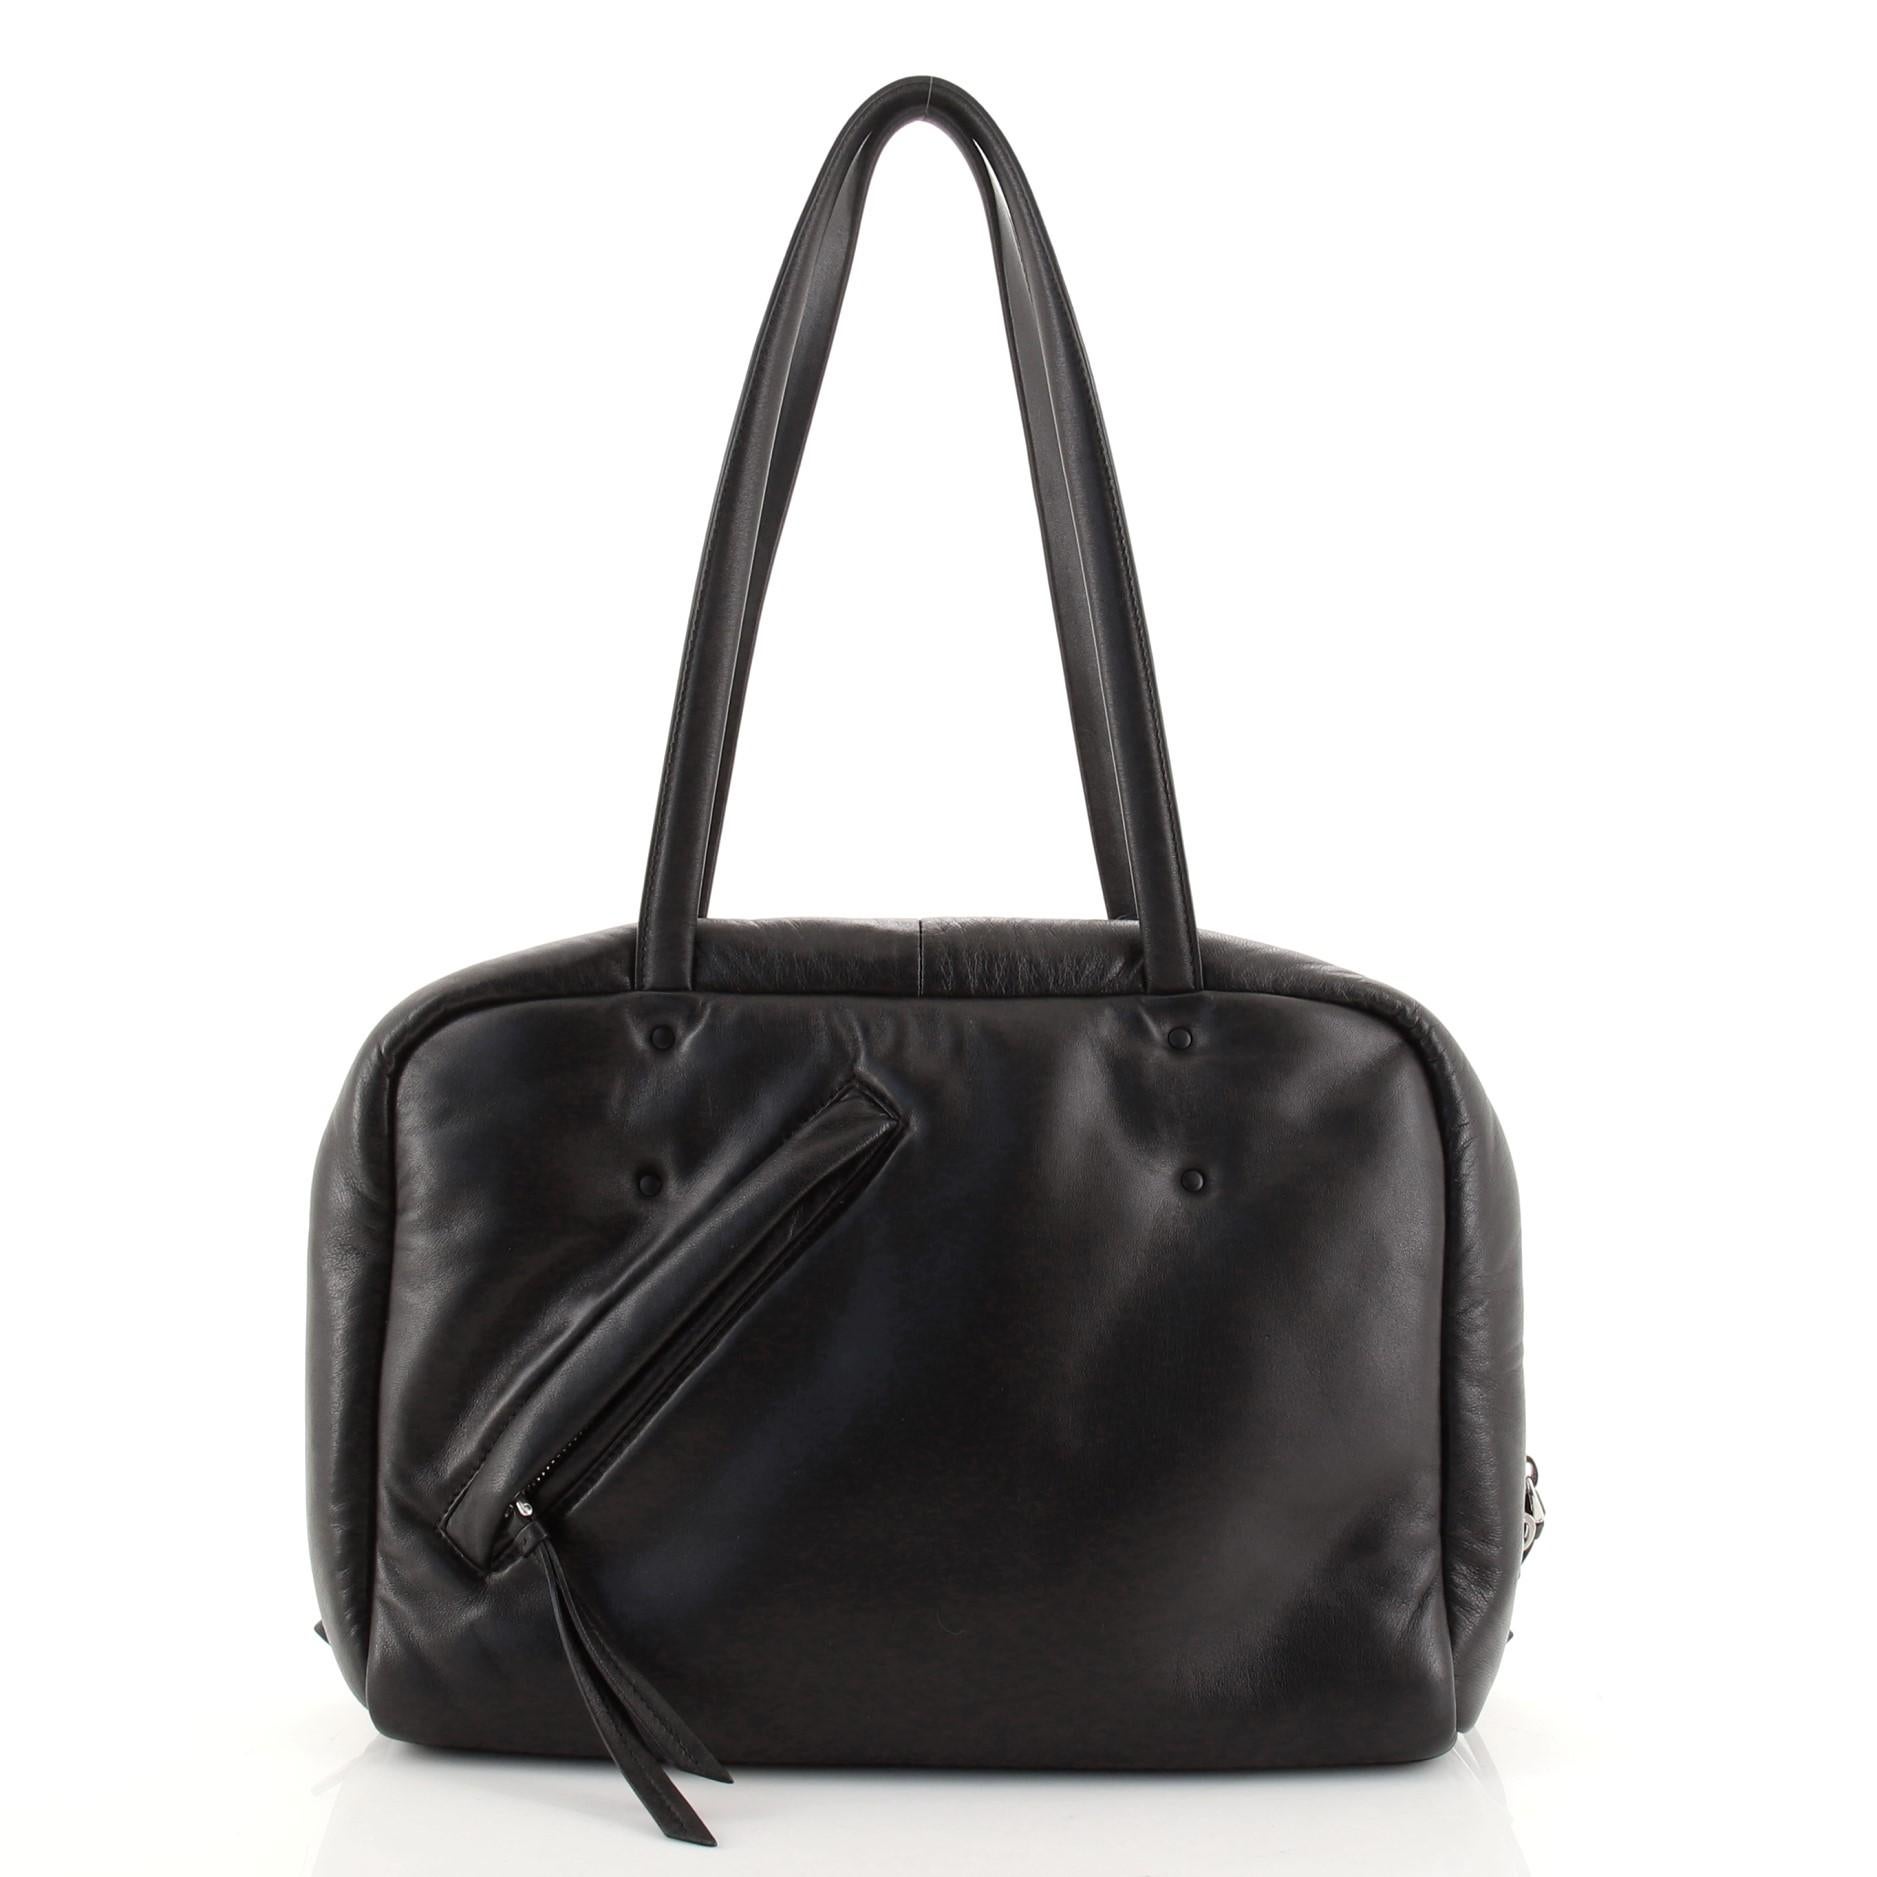 Prada Black Padded Nappa Leather Medium Bowler Bag

68220MSC